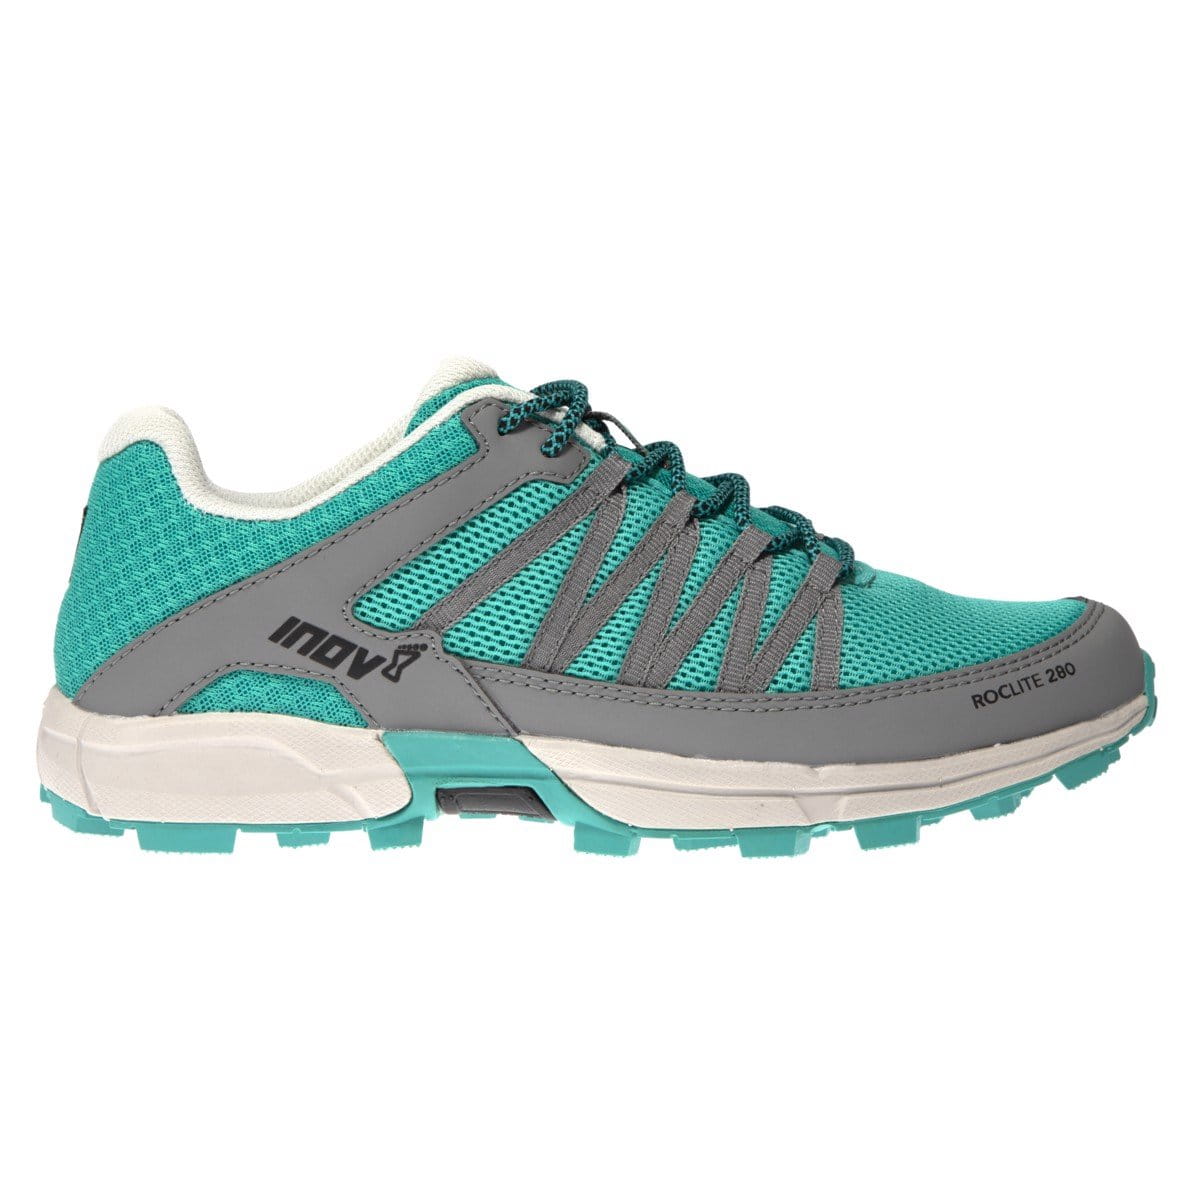 Dámské běžecké boty Inov-8  ROCLITE 280 W (M) teal/grey zelená/šedá